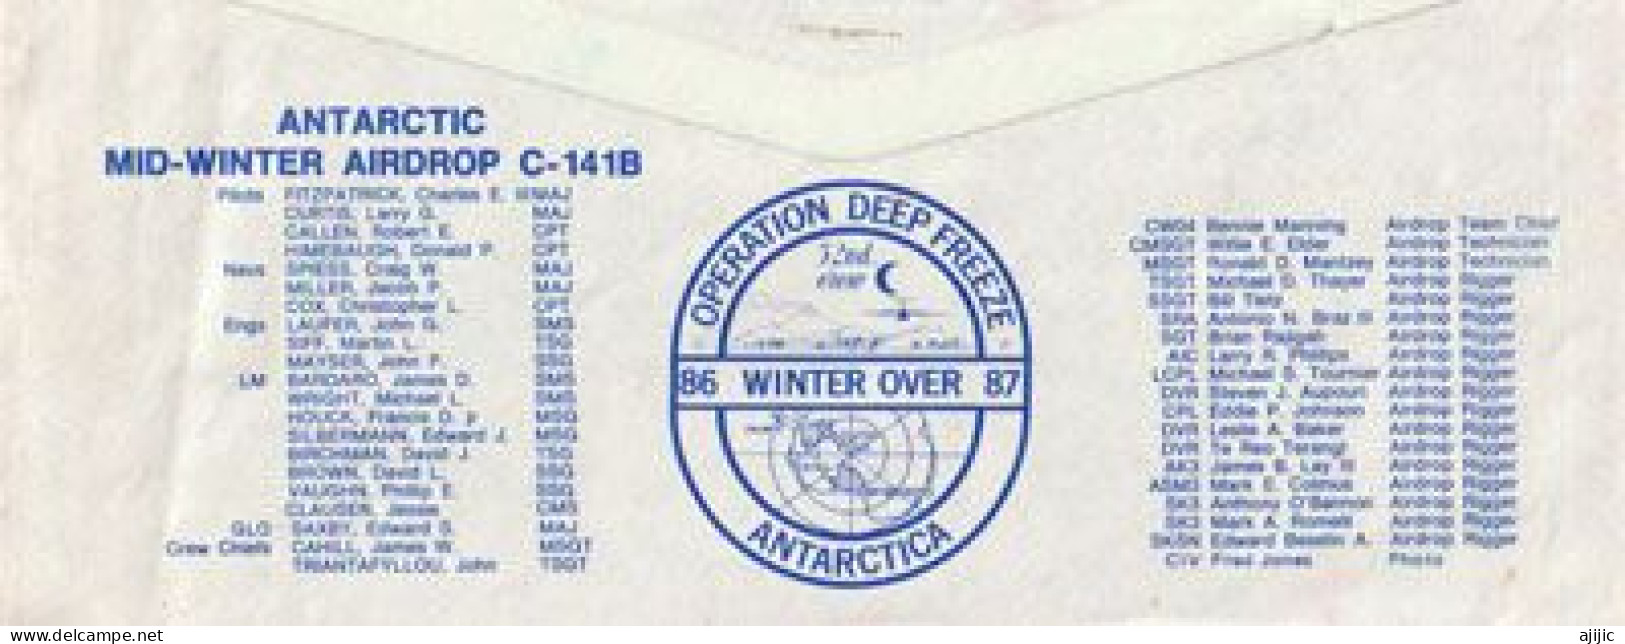 USA. Antarctic Mid-Winter Air Drop To Mc Murdo Station & Scott Base 1987.Avion USAF C-141B/Starlifter & KC-10 Extender - Midwinter